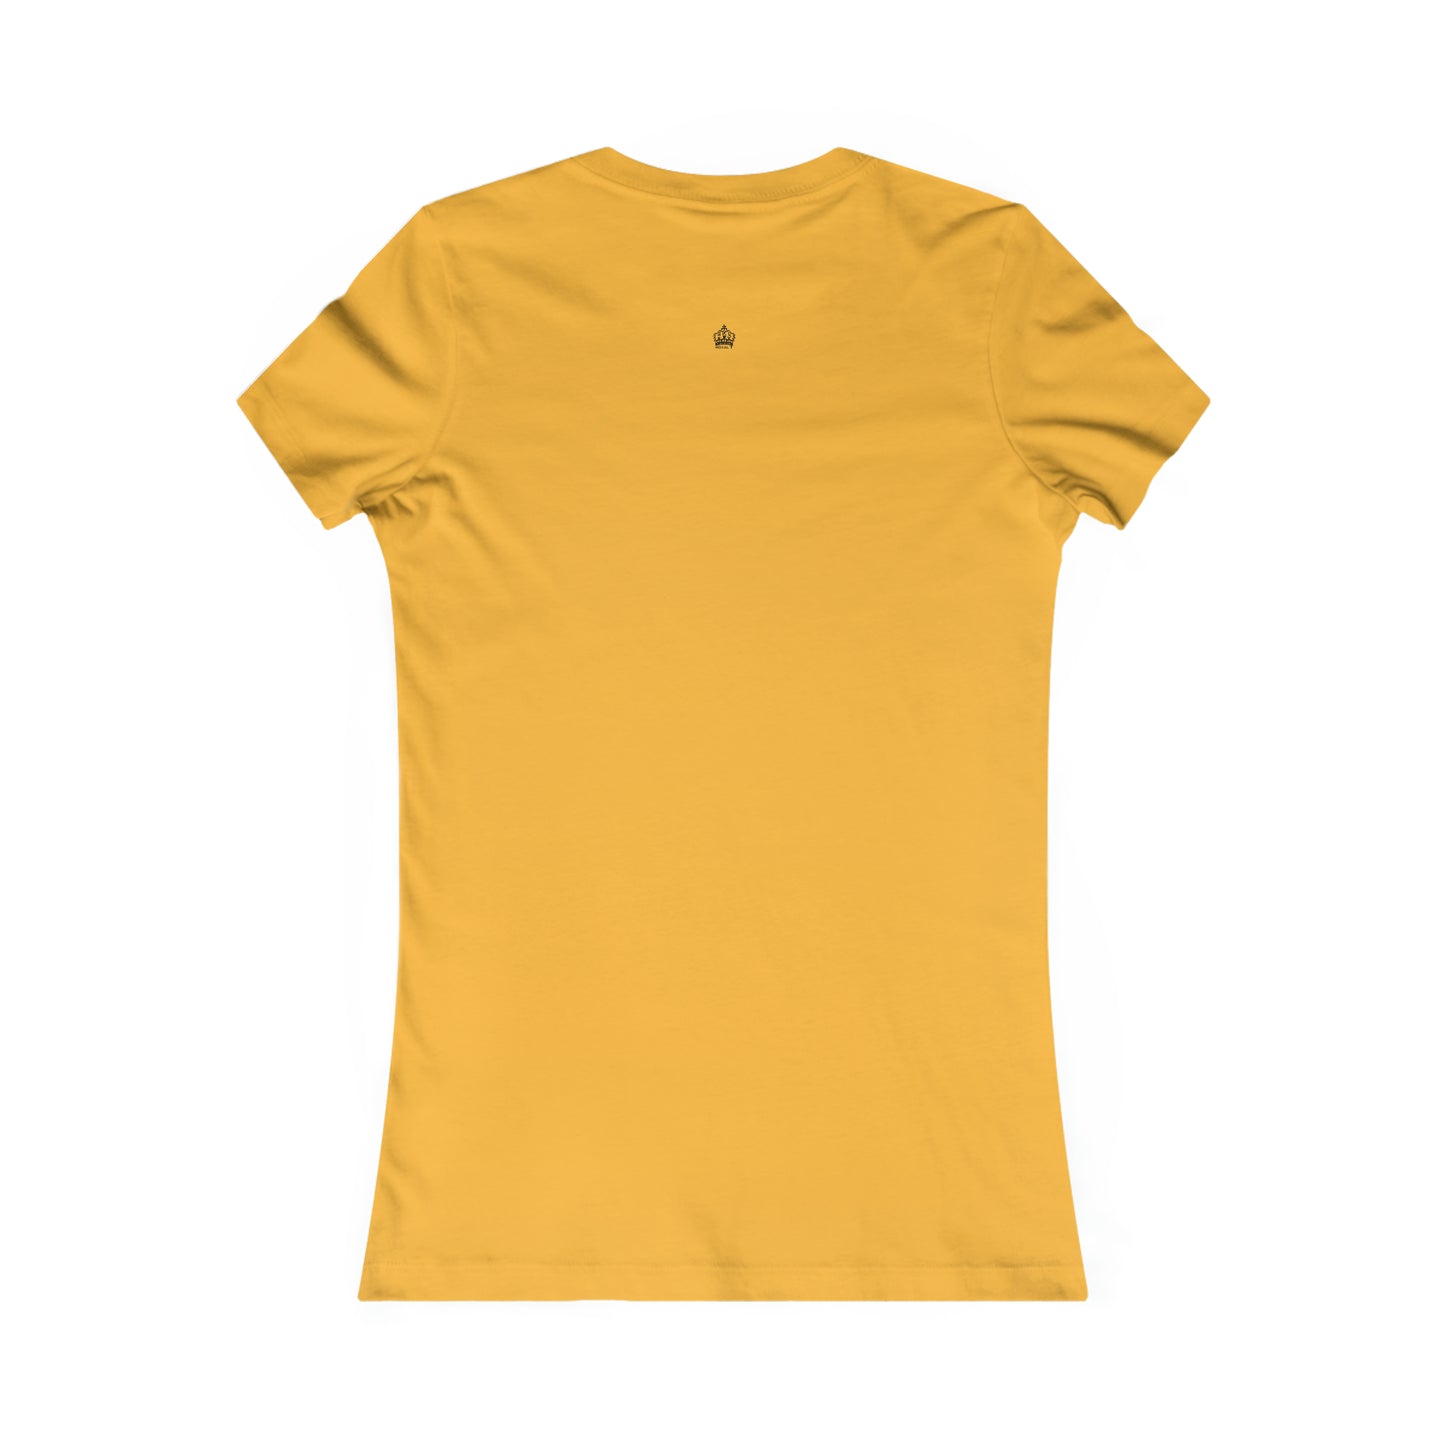 Gold - Women's Favorite T Shirt - Yellow Royal T